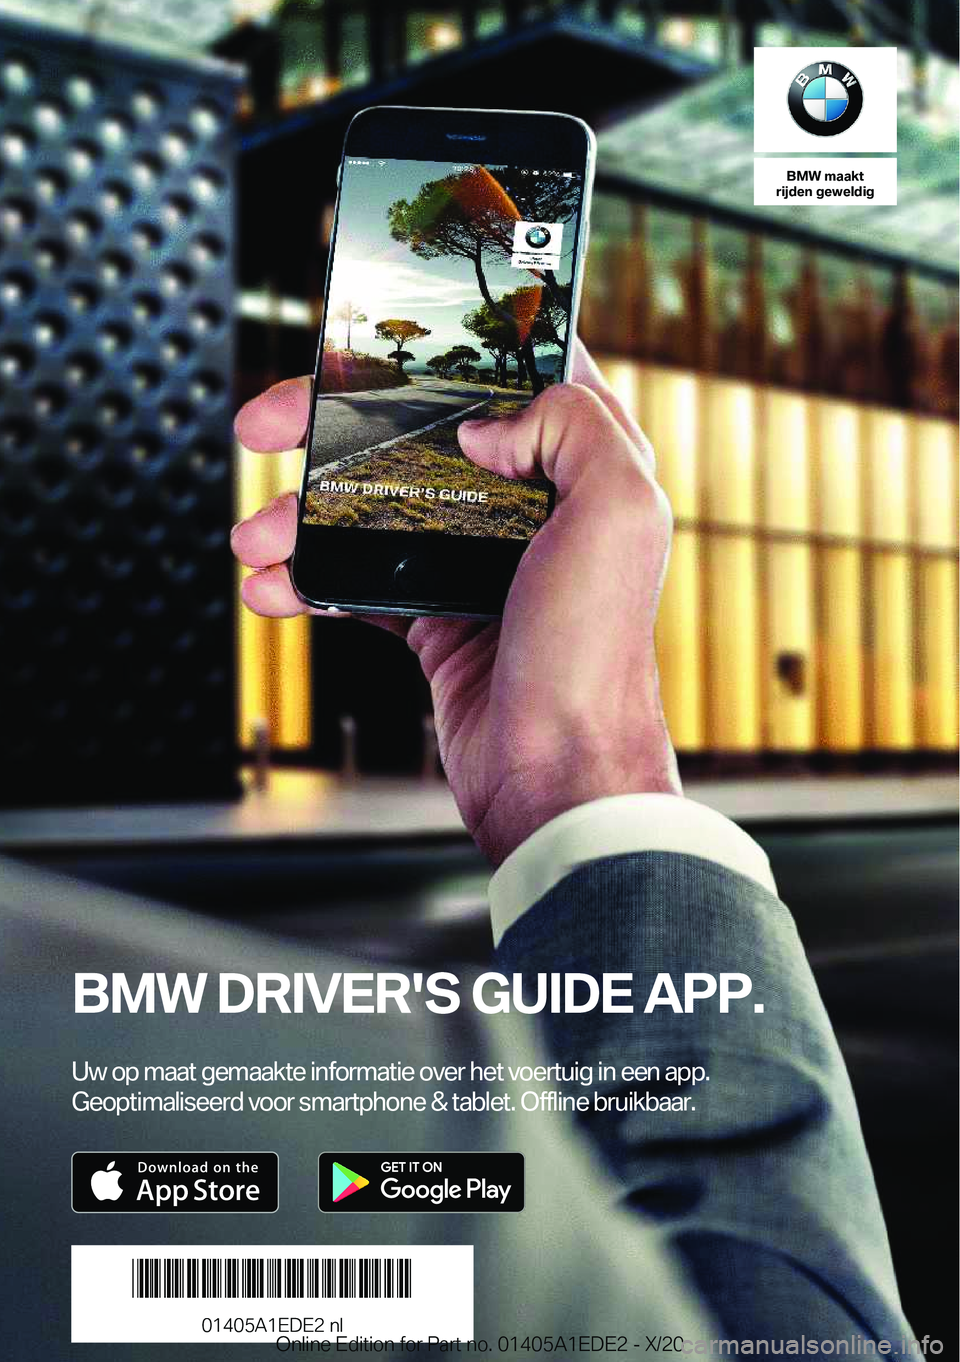 BMW 8 SERIES CONVERTIBLE 2021  Instructieboekjes (in Dutch) �B�M�W��m�a�a�k�t
�r�i�j�d�e�n��g�e�w�e�l�d�i�g
�B�M�W��D�R�I�V�E�R�'�S��G�U�I�D�E��A�P�P�.
�U�w��o�p��m�a�a�t��g�e�m�a�a�k�t�e��i�n�f�o�r�m�a�t�i�e��o�v�e�r��h�e�t��v�o�e�r�t�u�i�g��